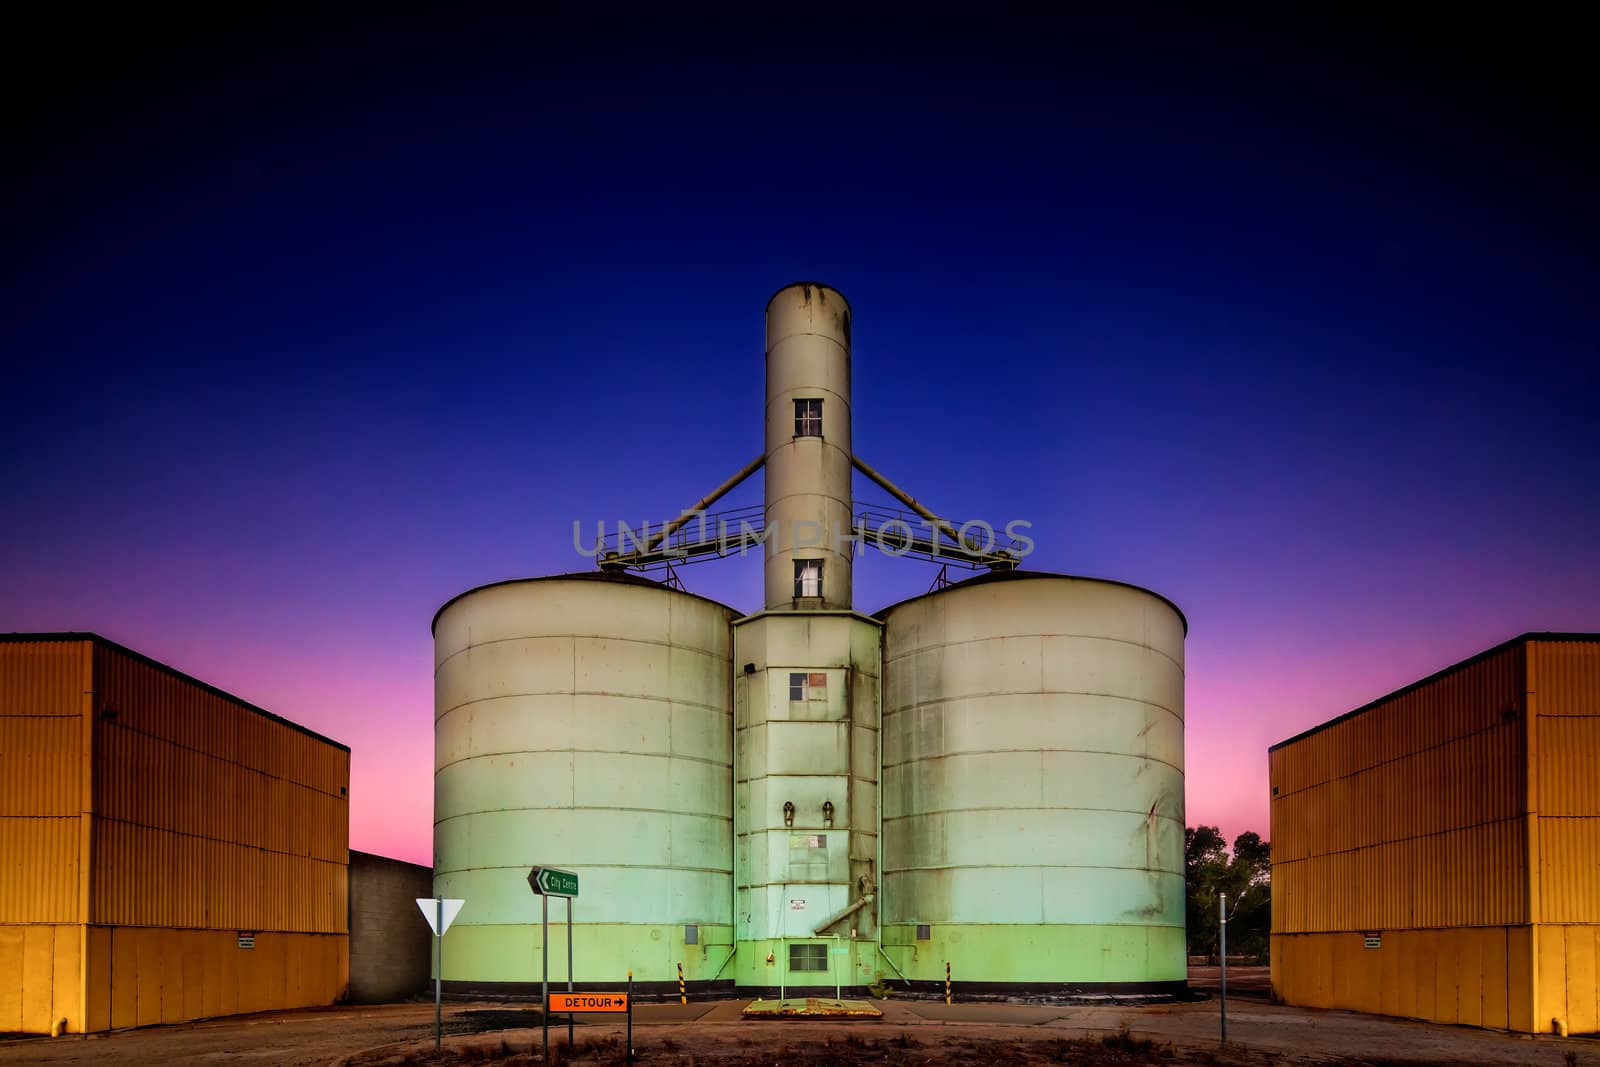 Grain storage silo in purple pink sunset dusk sky by hangingpixels